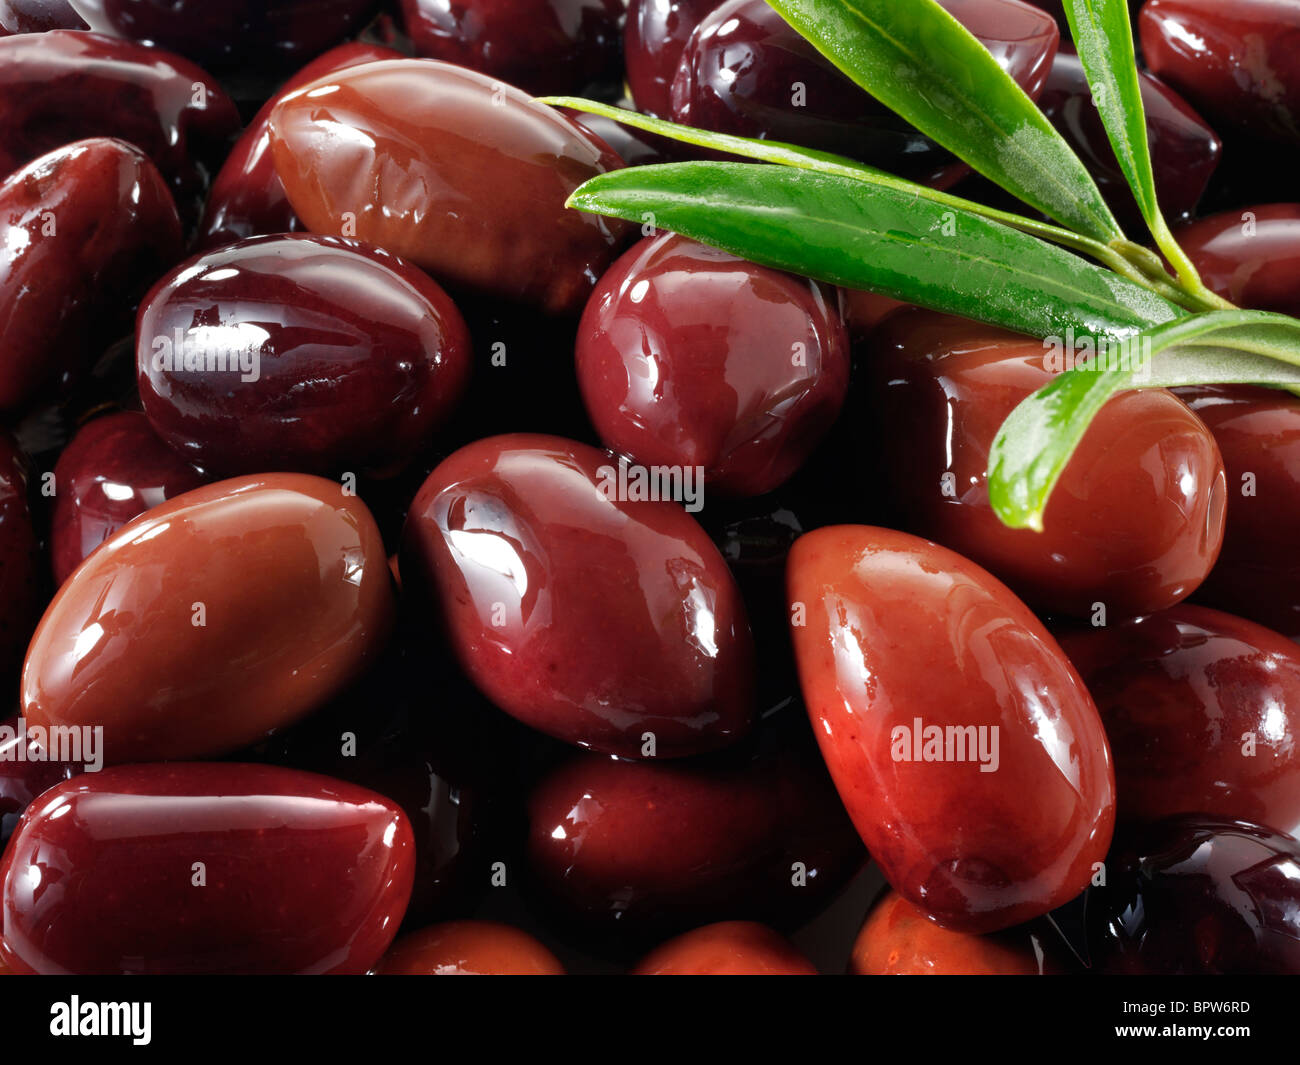 Fresh Kalamata olives photos, pictures & images. Stock Photo